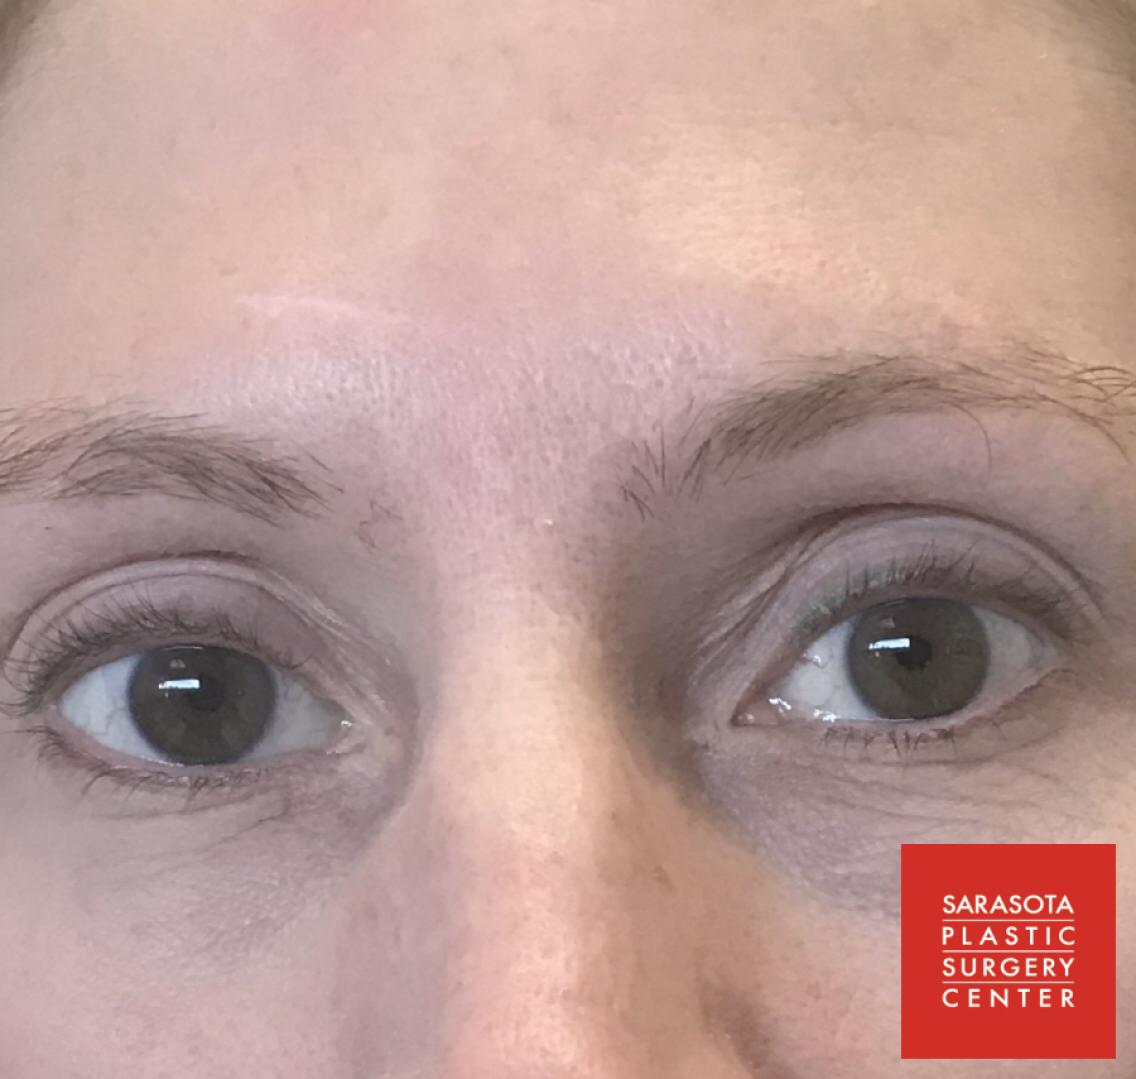 Permanent Makeup - Eyeliner: Patient 8 - After  